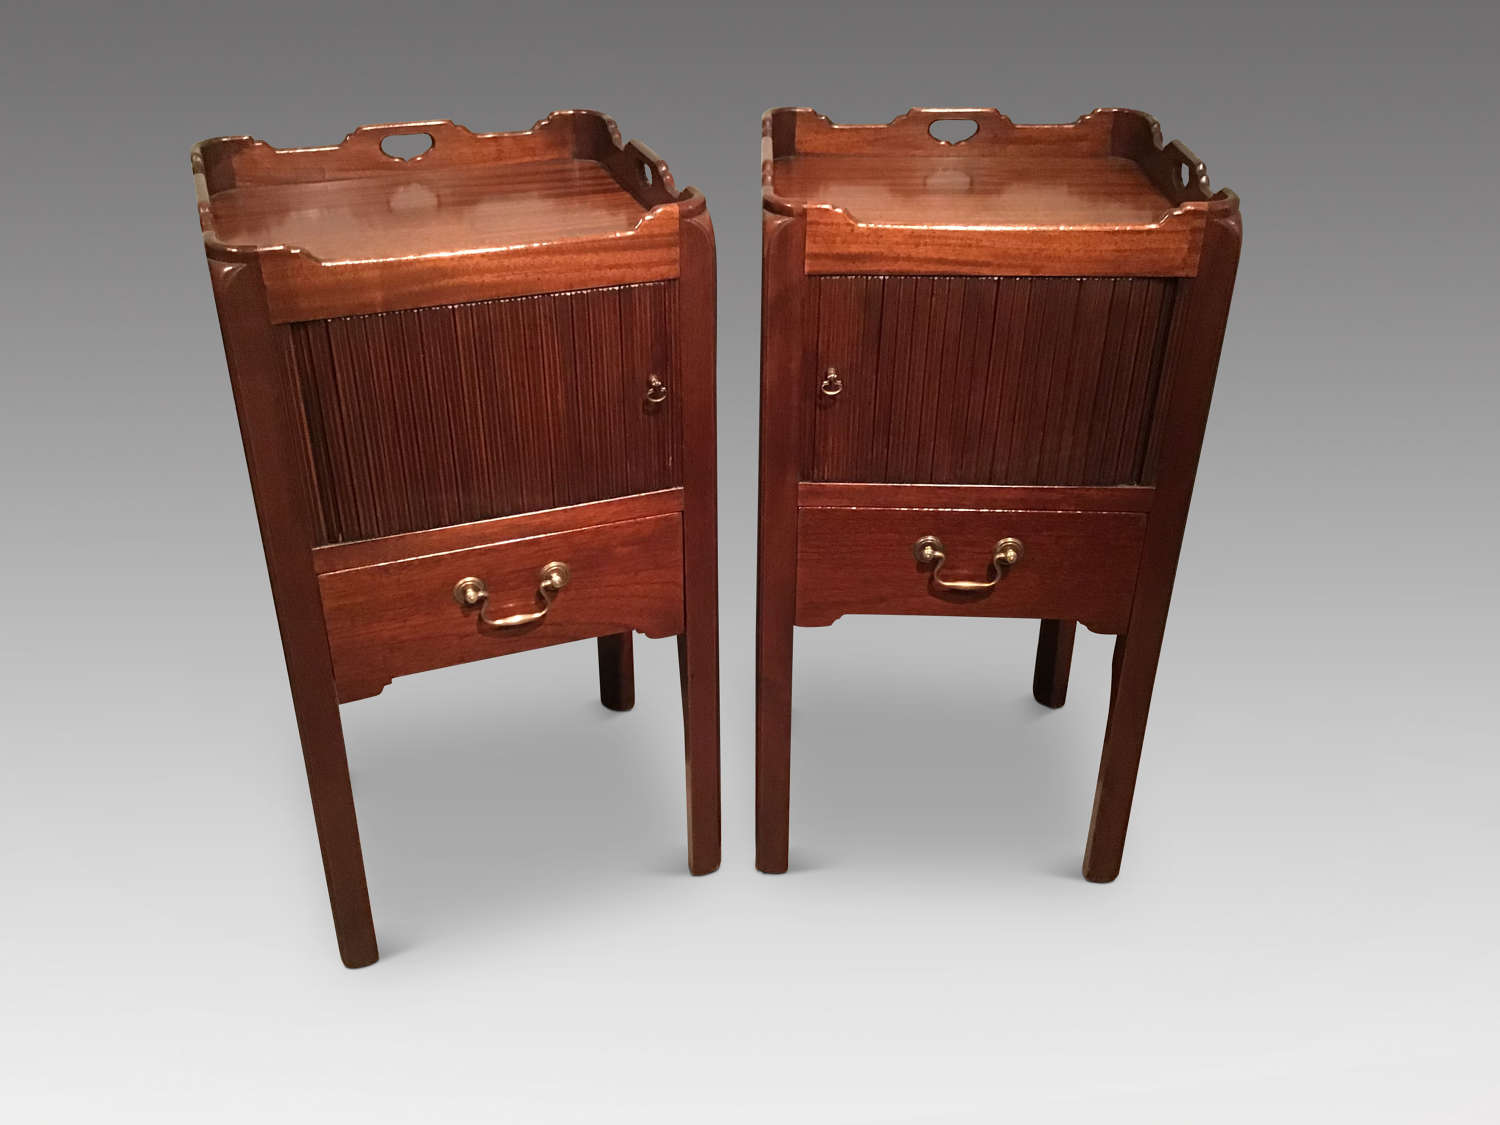 Pair of Georgian design bedside cabinets